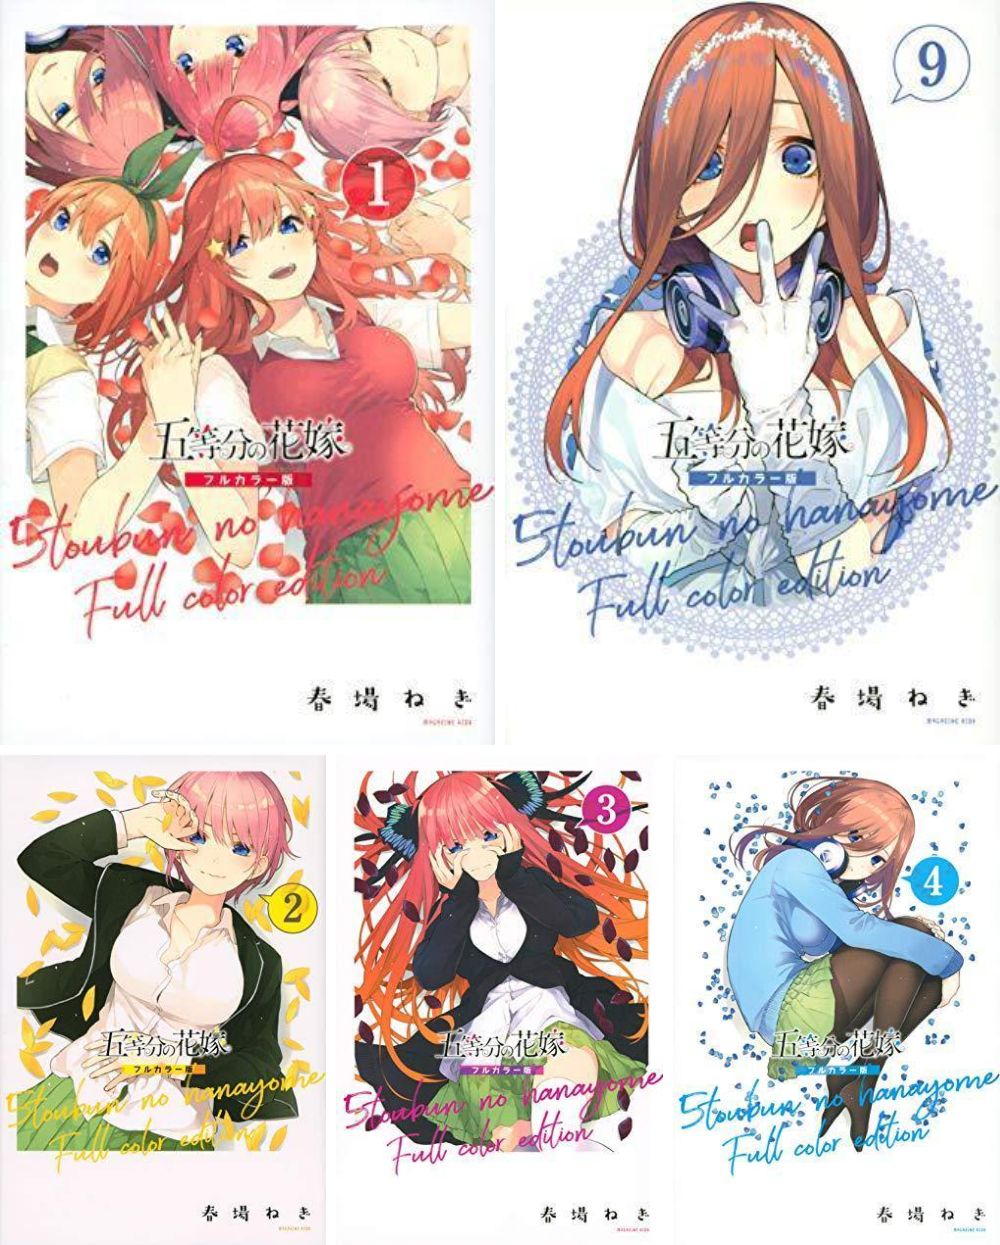 The Quintessential Quintuplets Part 1 Manga Box Set|Paperback